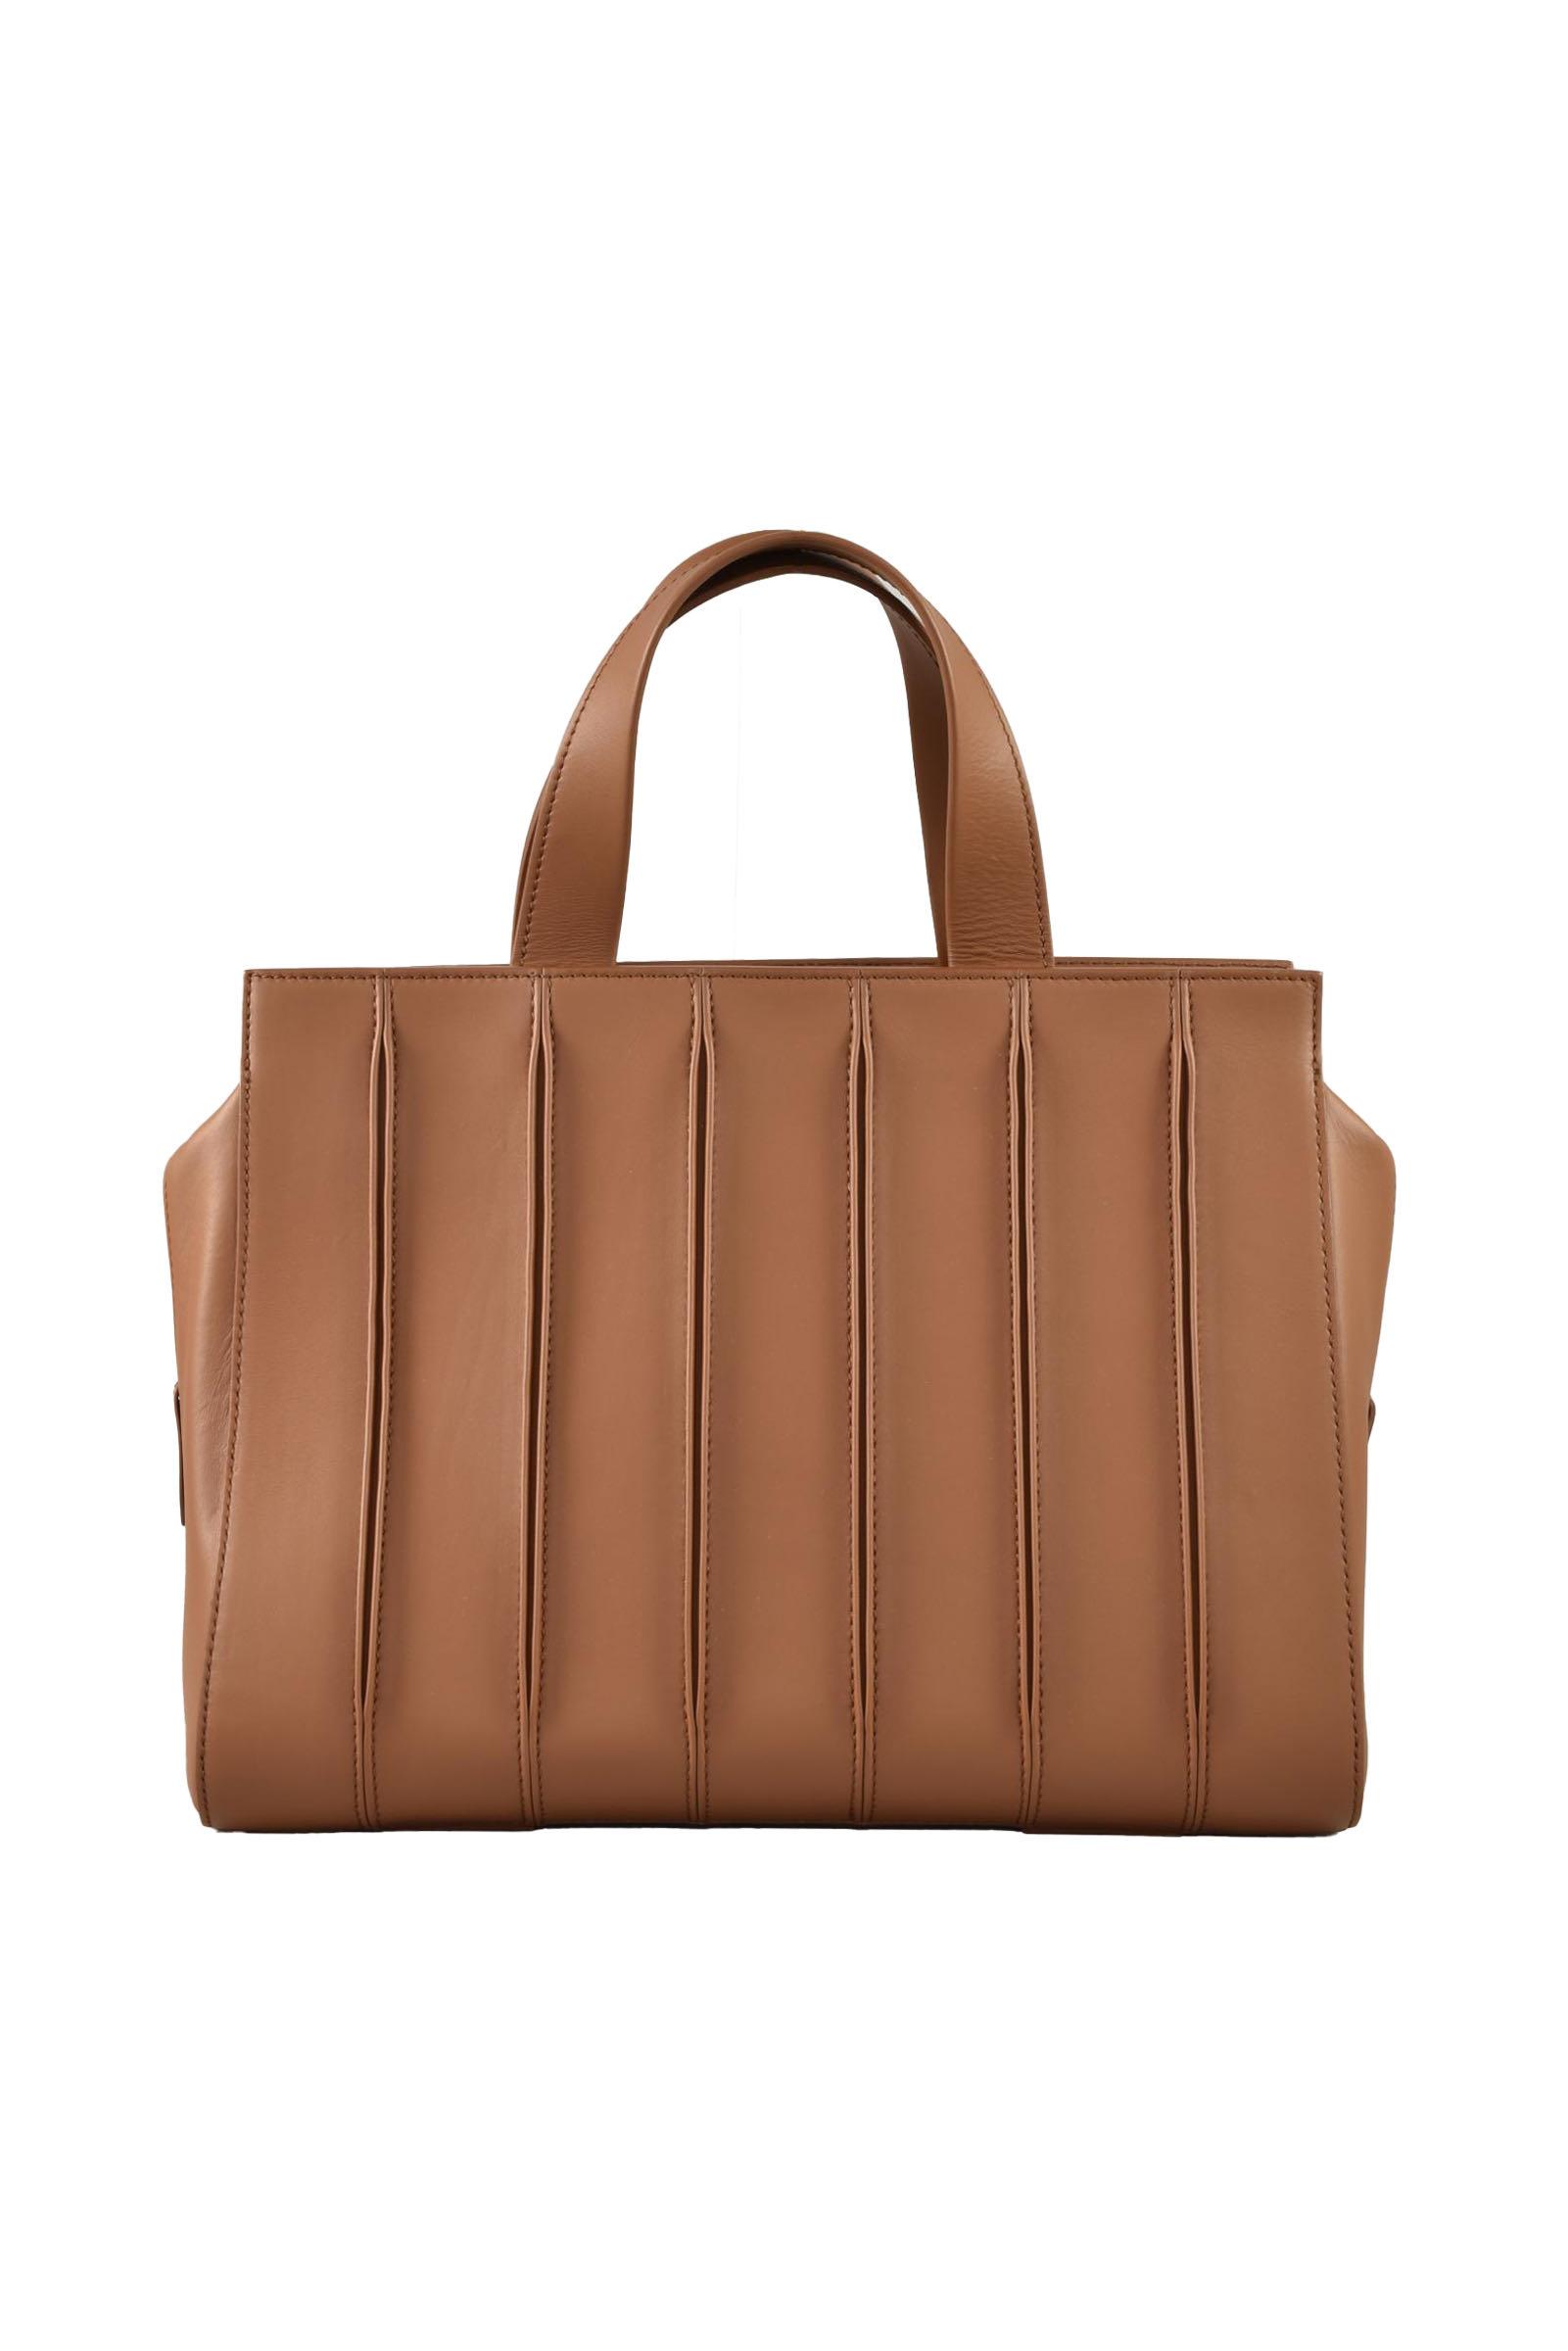 Max Mara Women's Leather Handbag